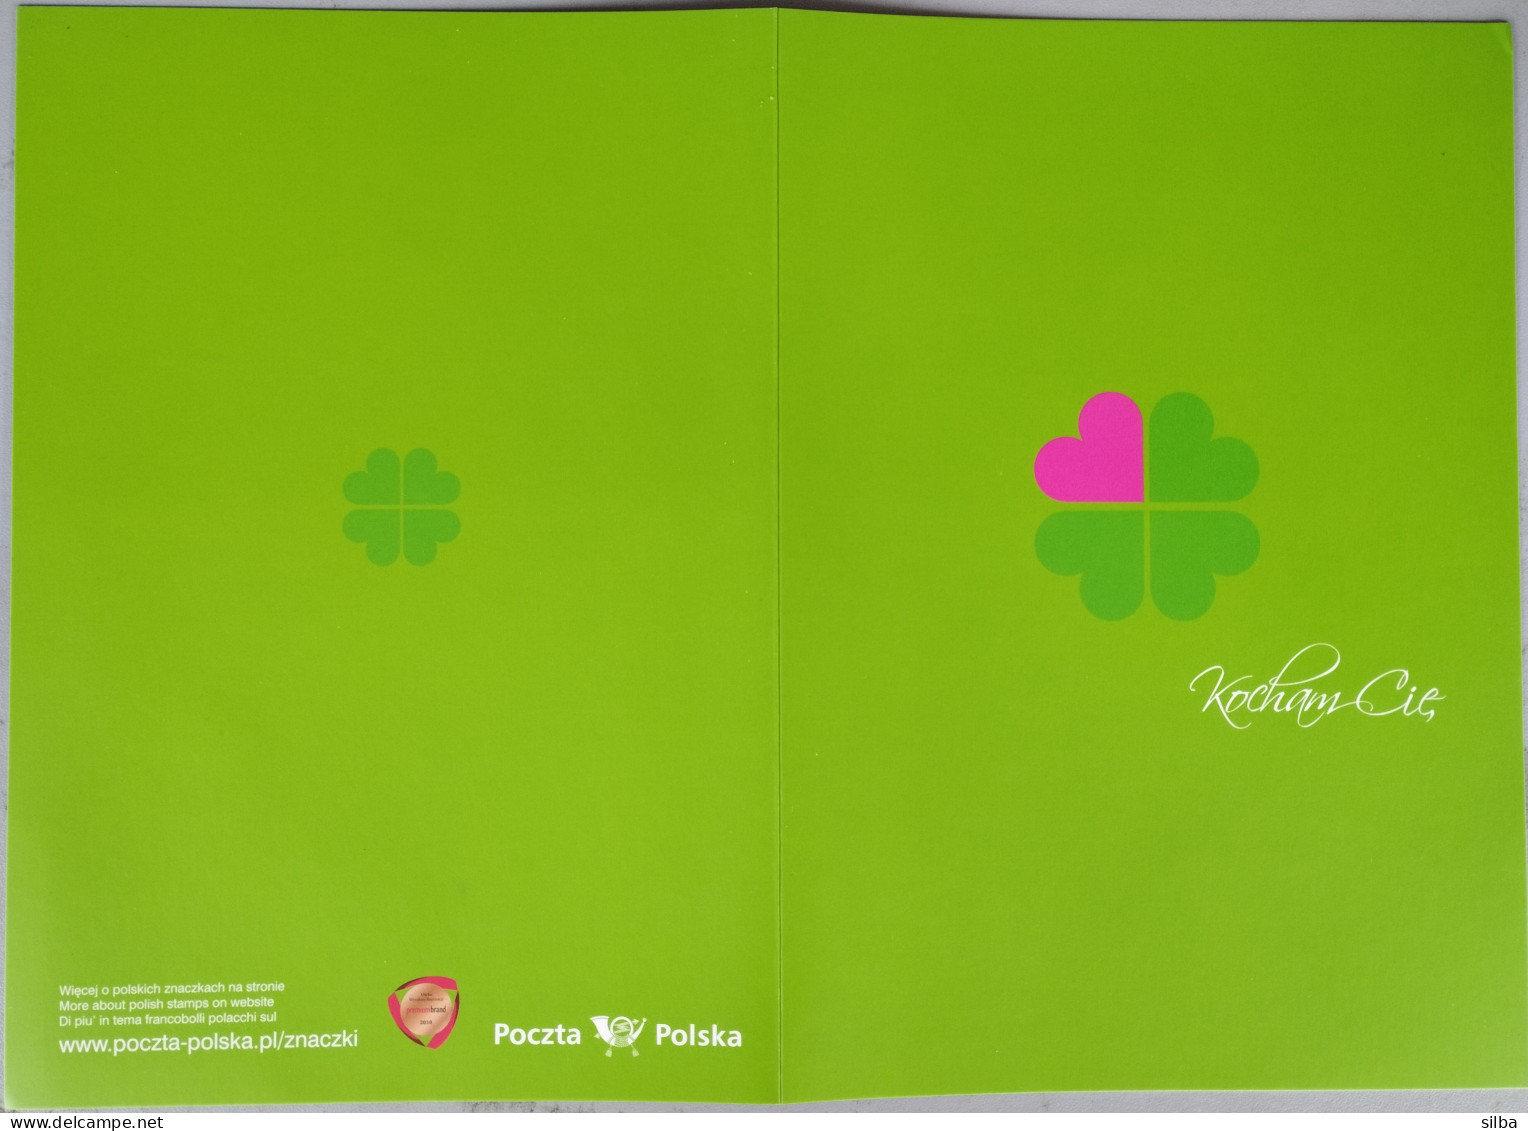 Poland 2009 / Valentines Day, Celebration, Love, Four-leaf Clover, Happiness / MNH Stamp + FDC / Souvenir Folder - Lettres & Documents